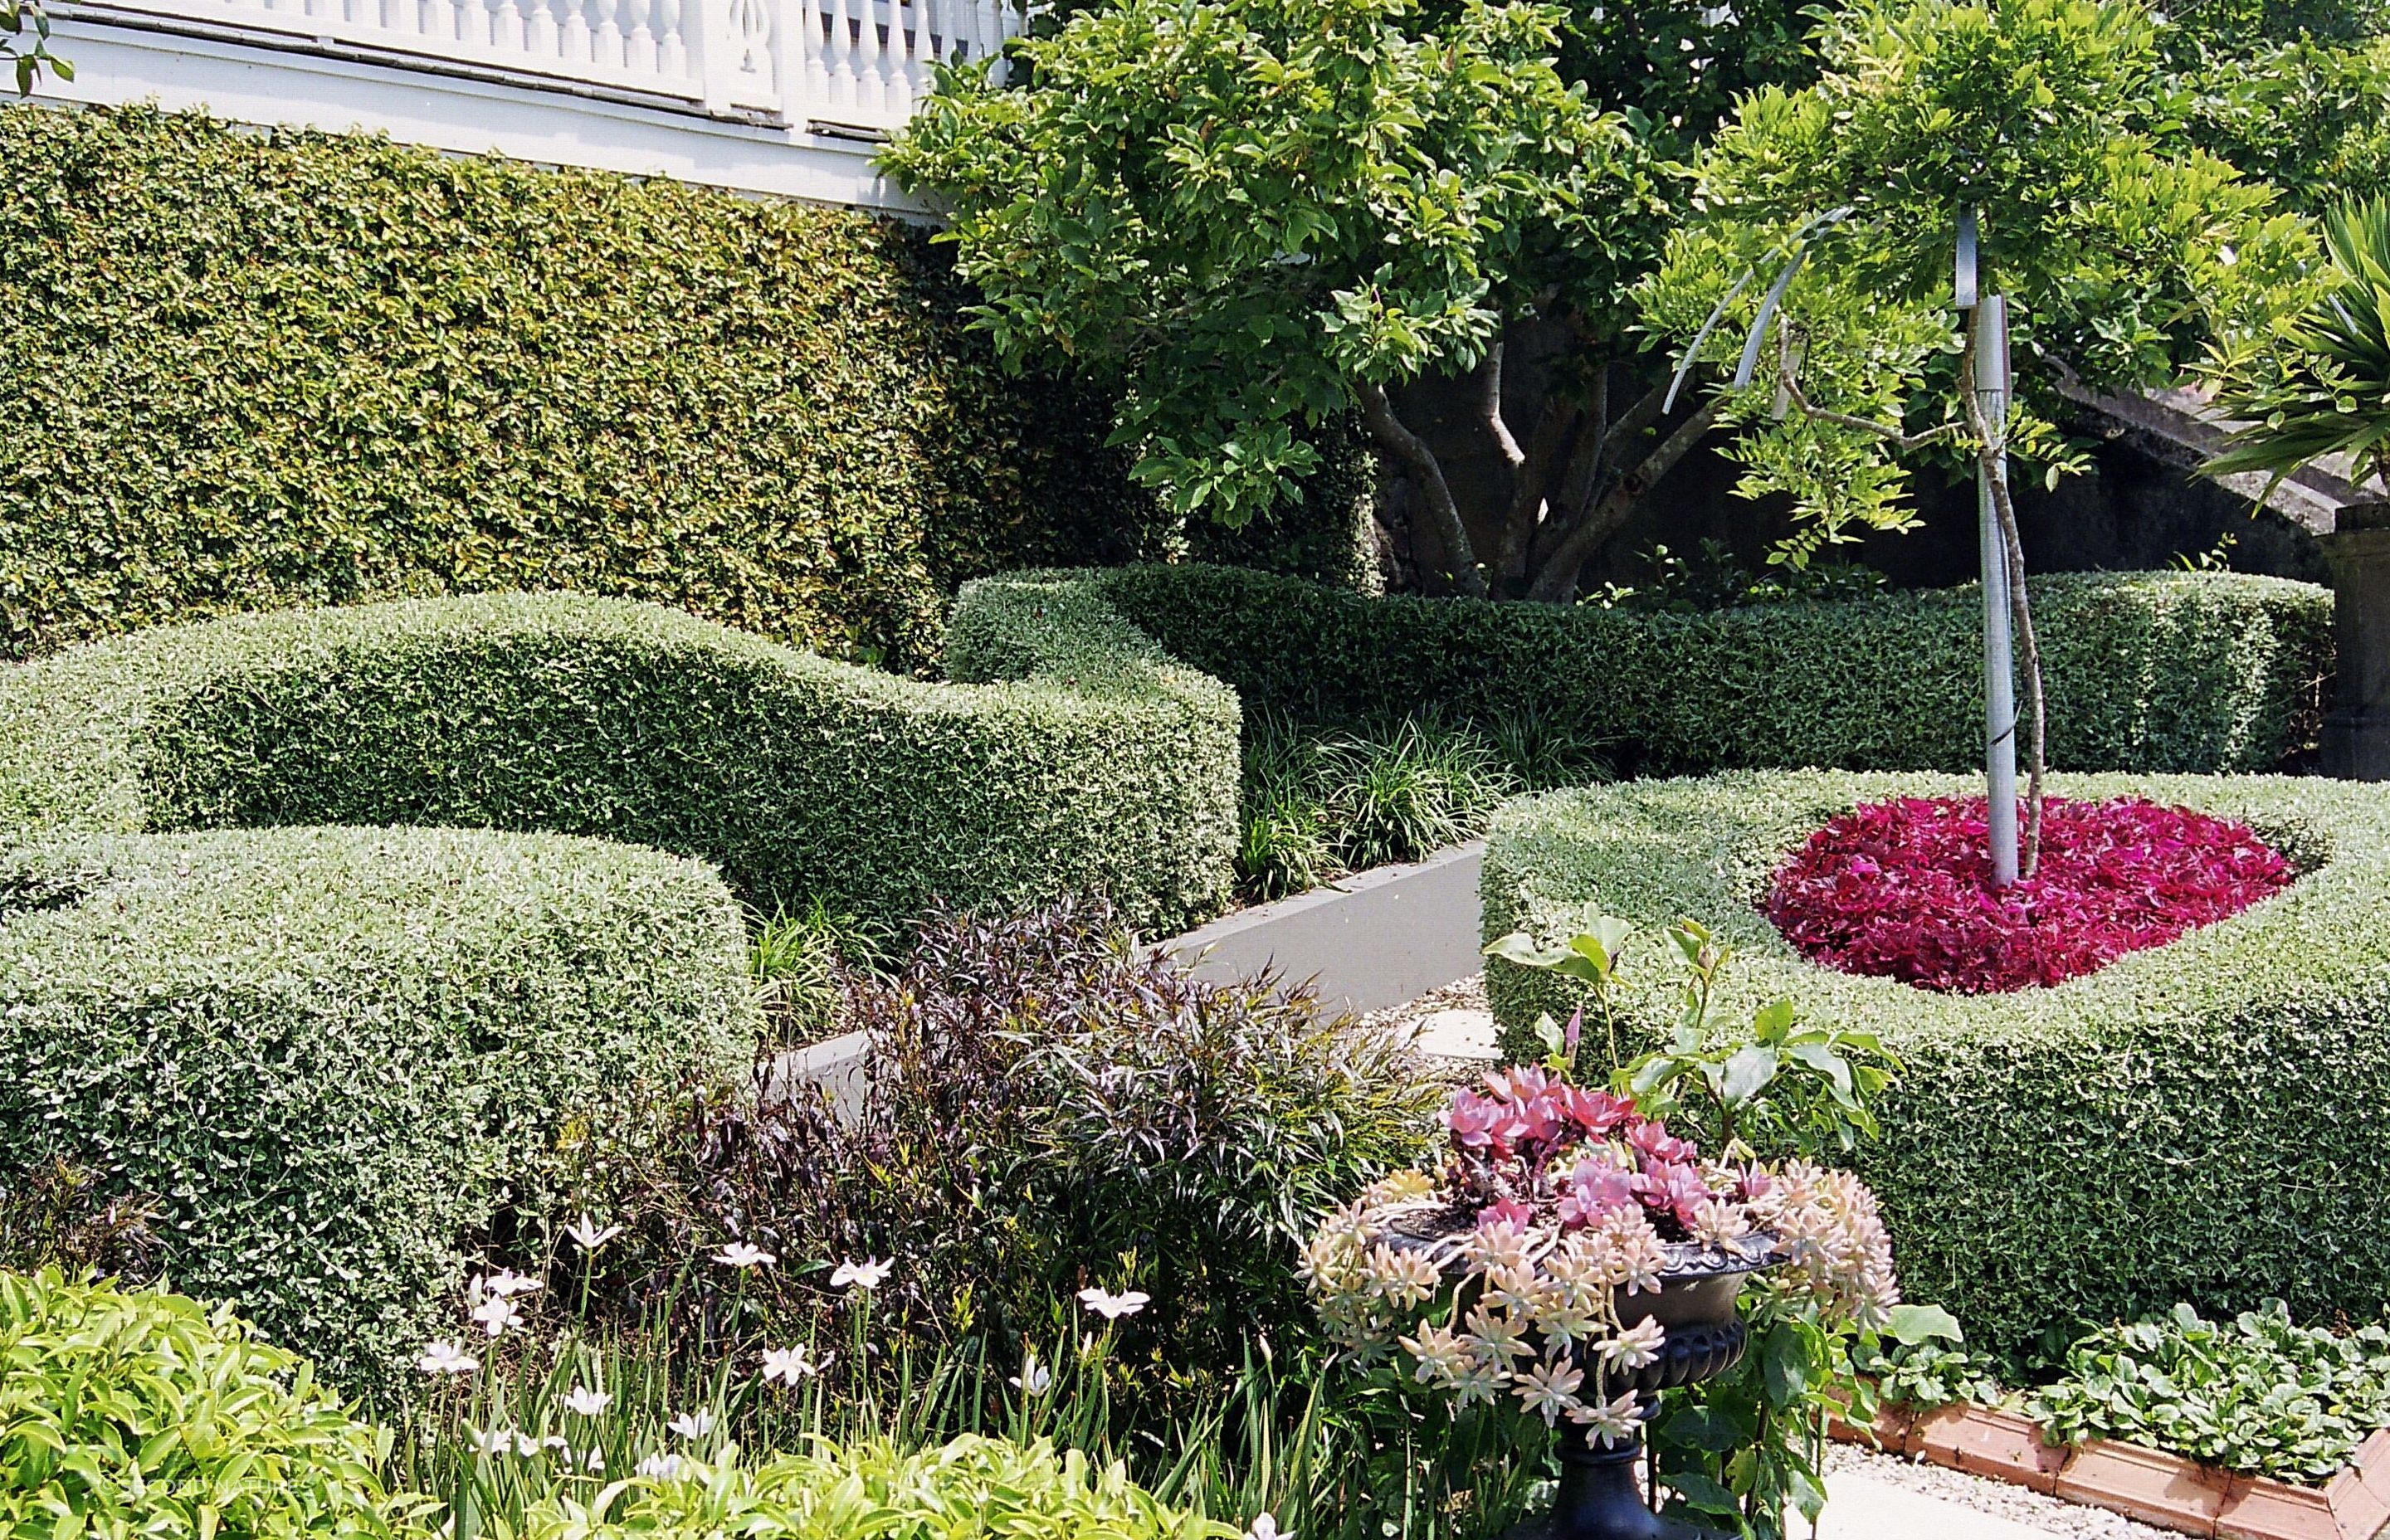 Hedges create visual interest in this modern structured garden.